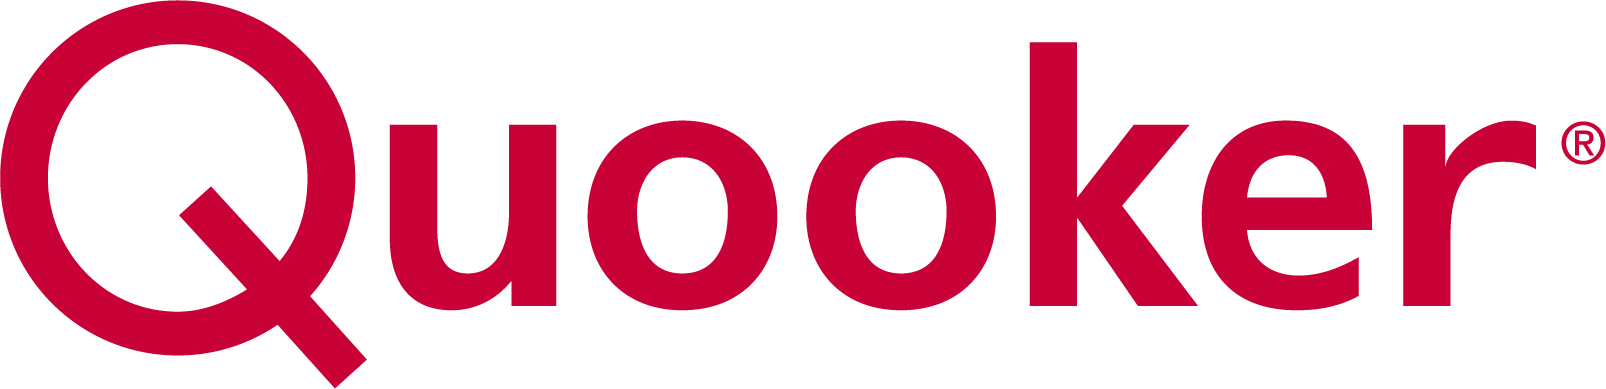 Quooker logo RGB 200,2,54